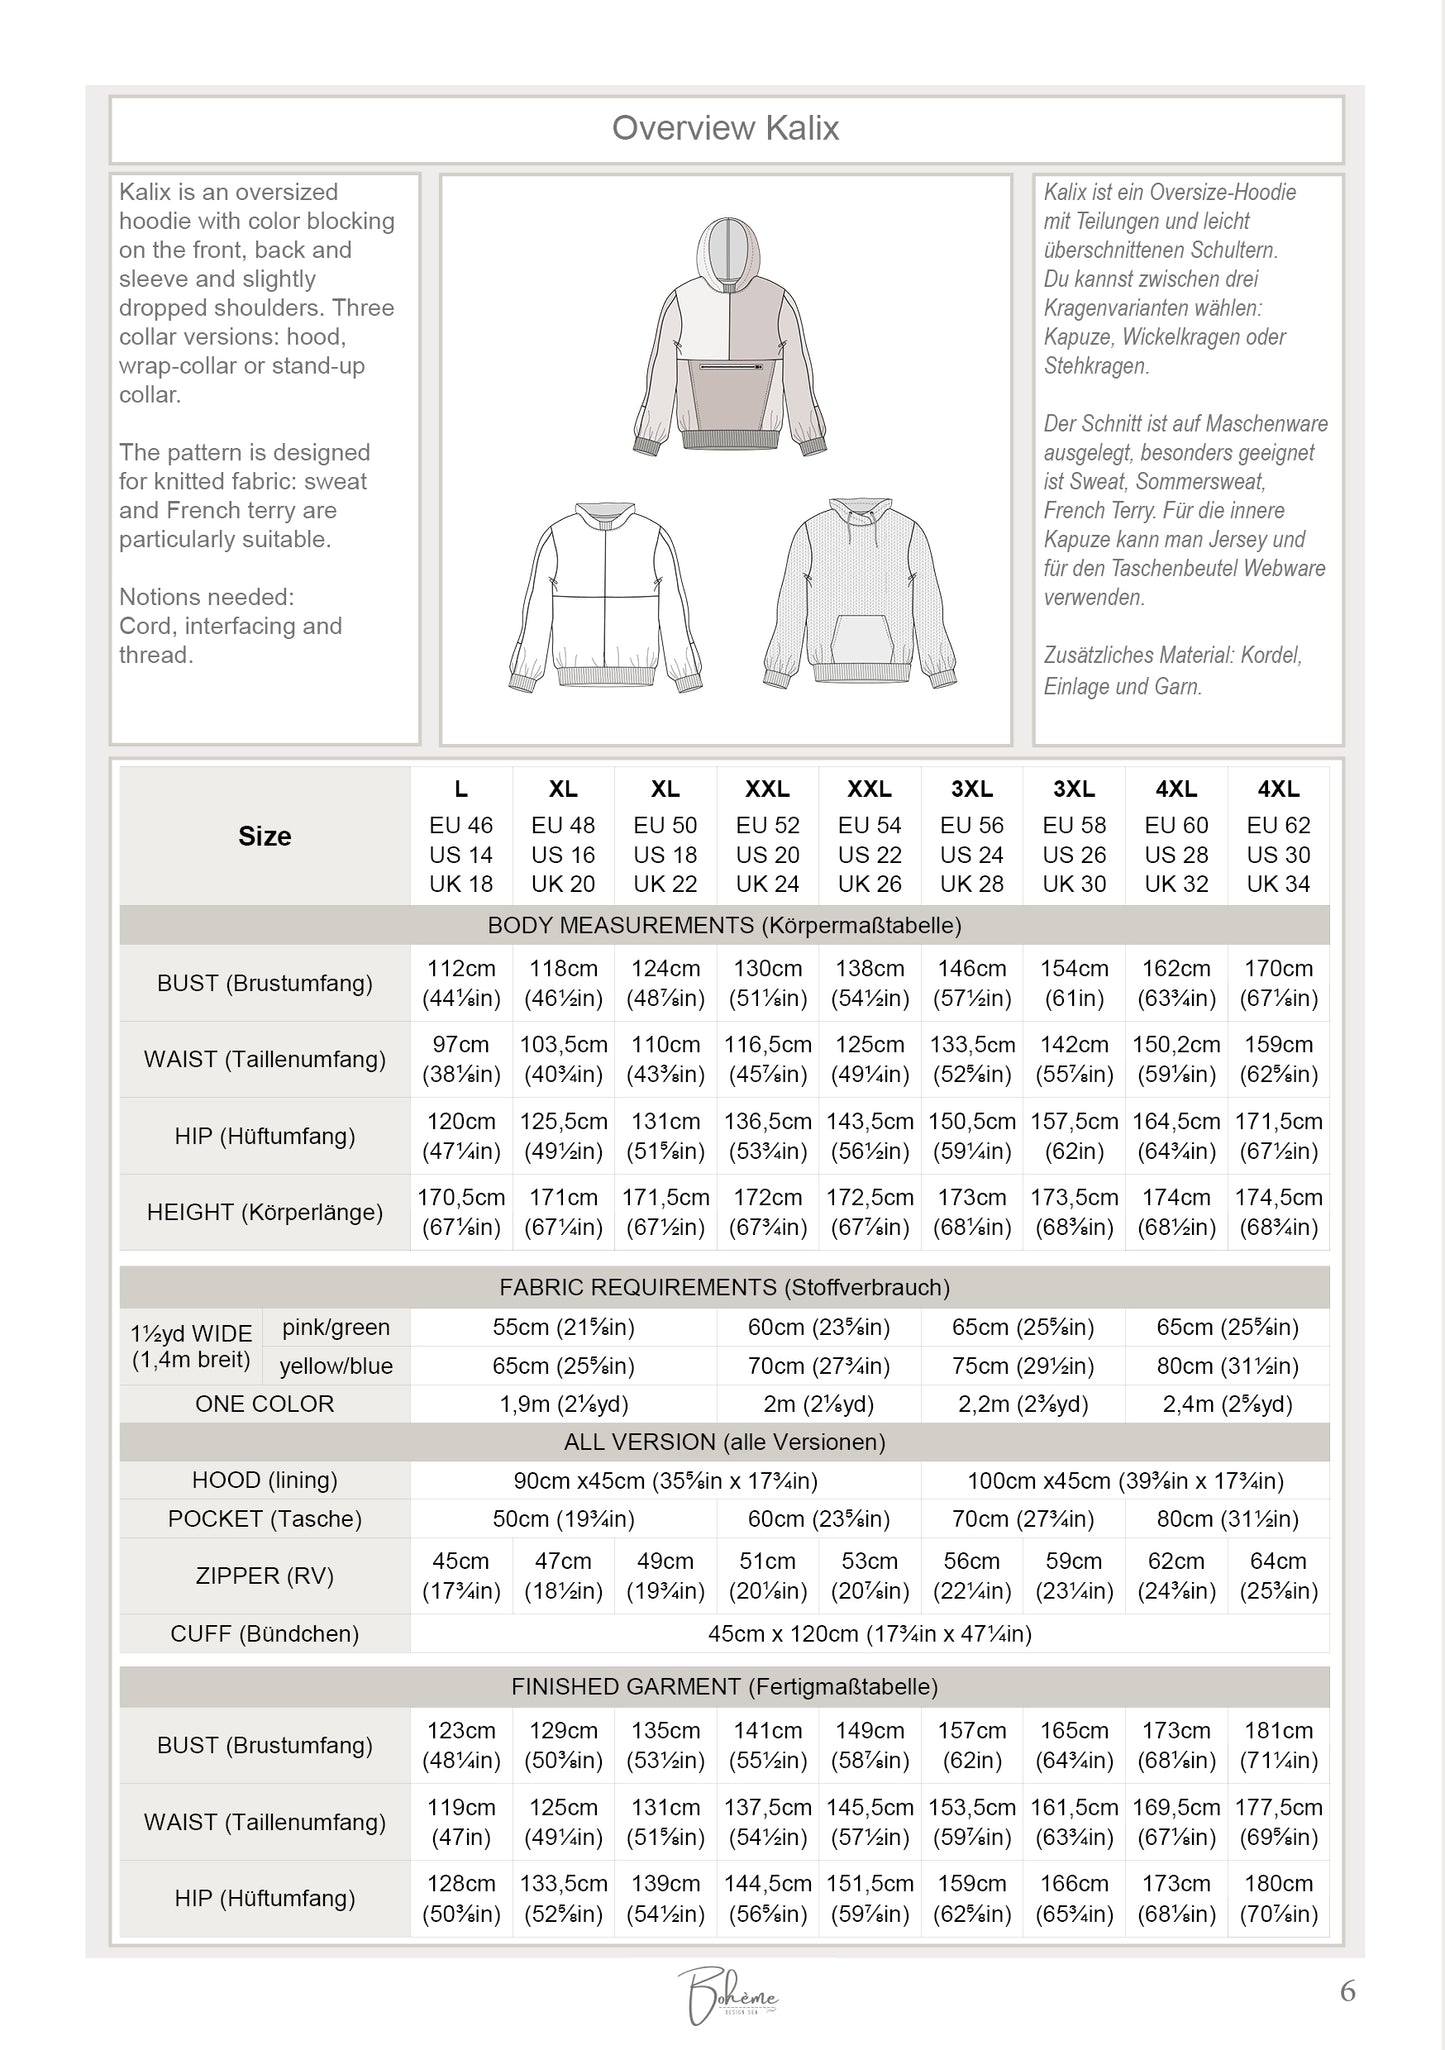 Hoodie | Kalix W2409 | Woman L - 4XL | Digital Sewing Pattern | PDF | Projector | Bohème | Sweater | Pullover | Color Blocking